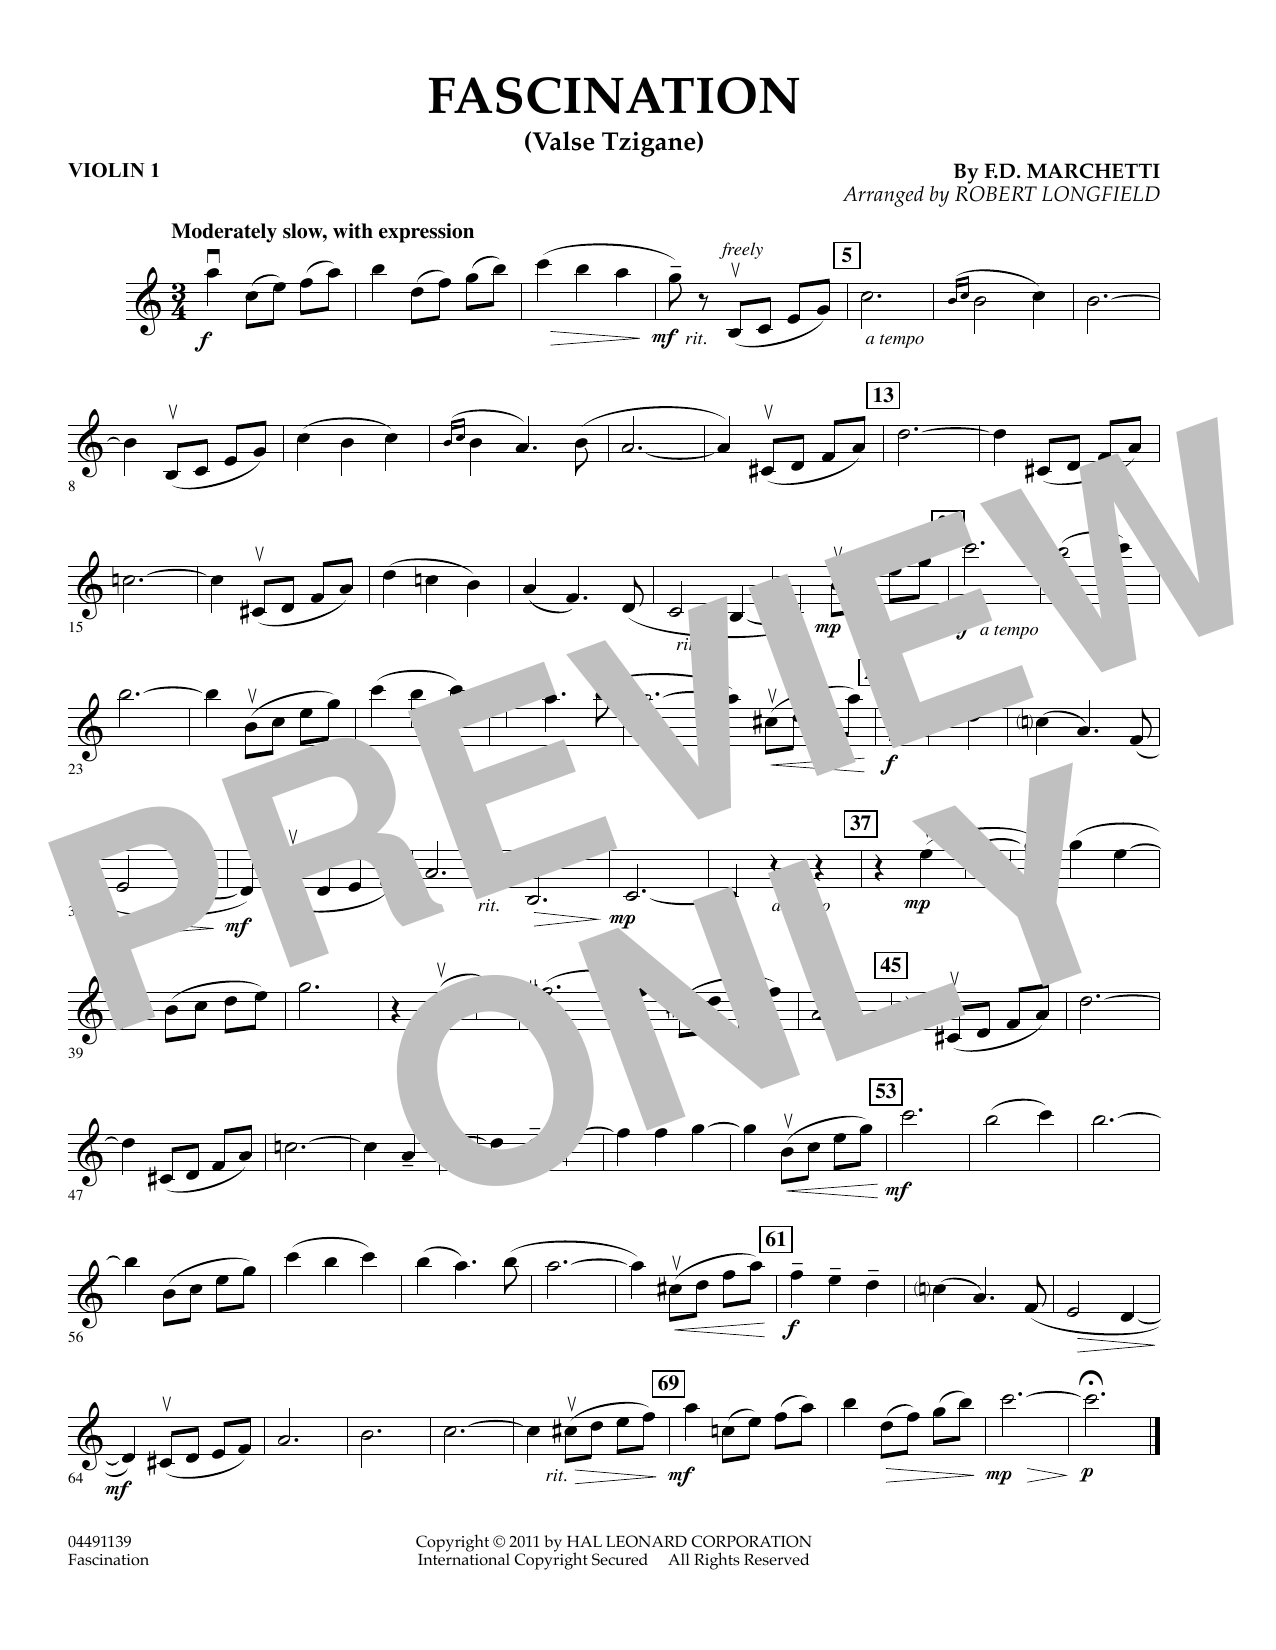 Robert Longfield Fascination (Valse Tzigane) - Violin 1 Sheet Music Notes & Chords for String Quartet - Download or Print PDF